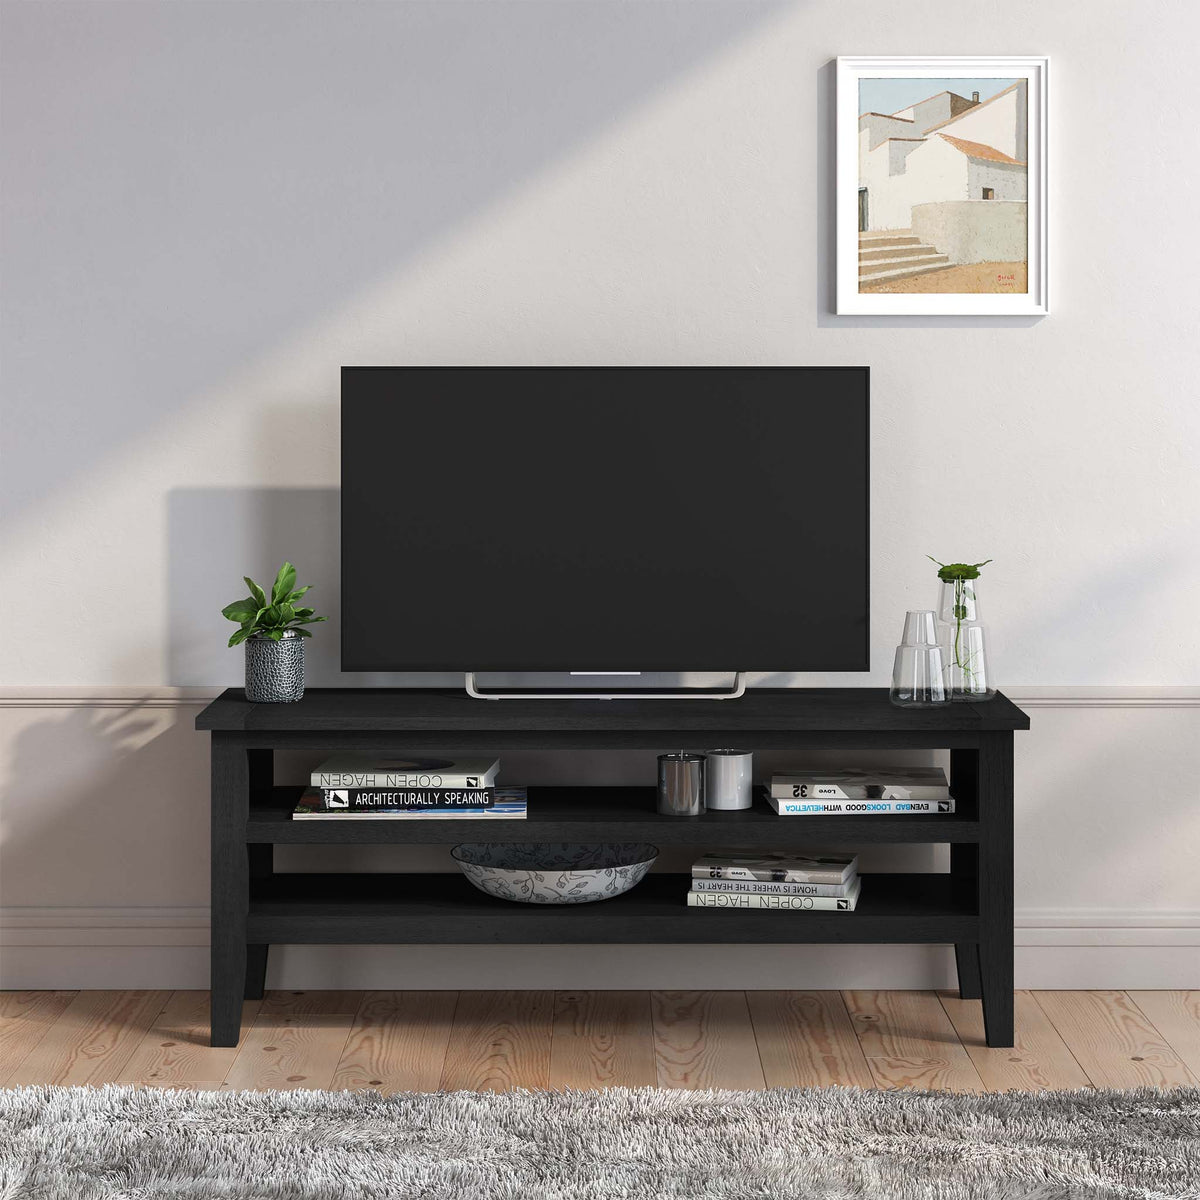 Elise Noir Black Acacia 120cm TV Unit Stand for living room